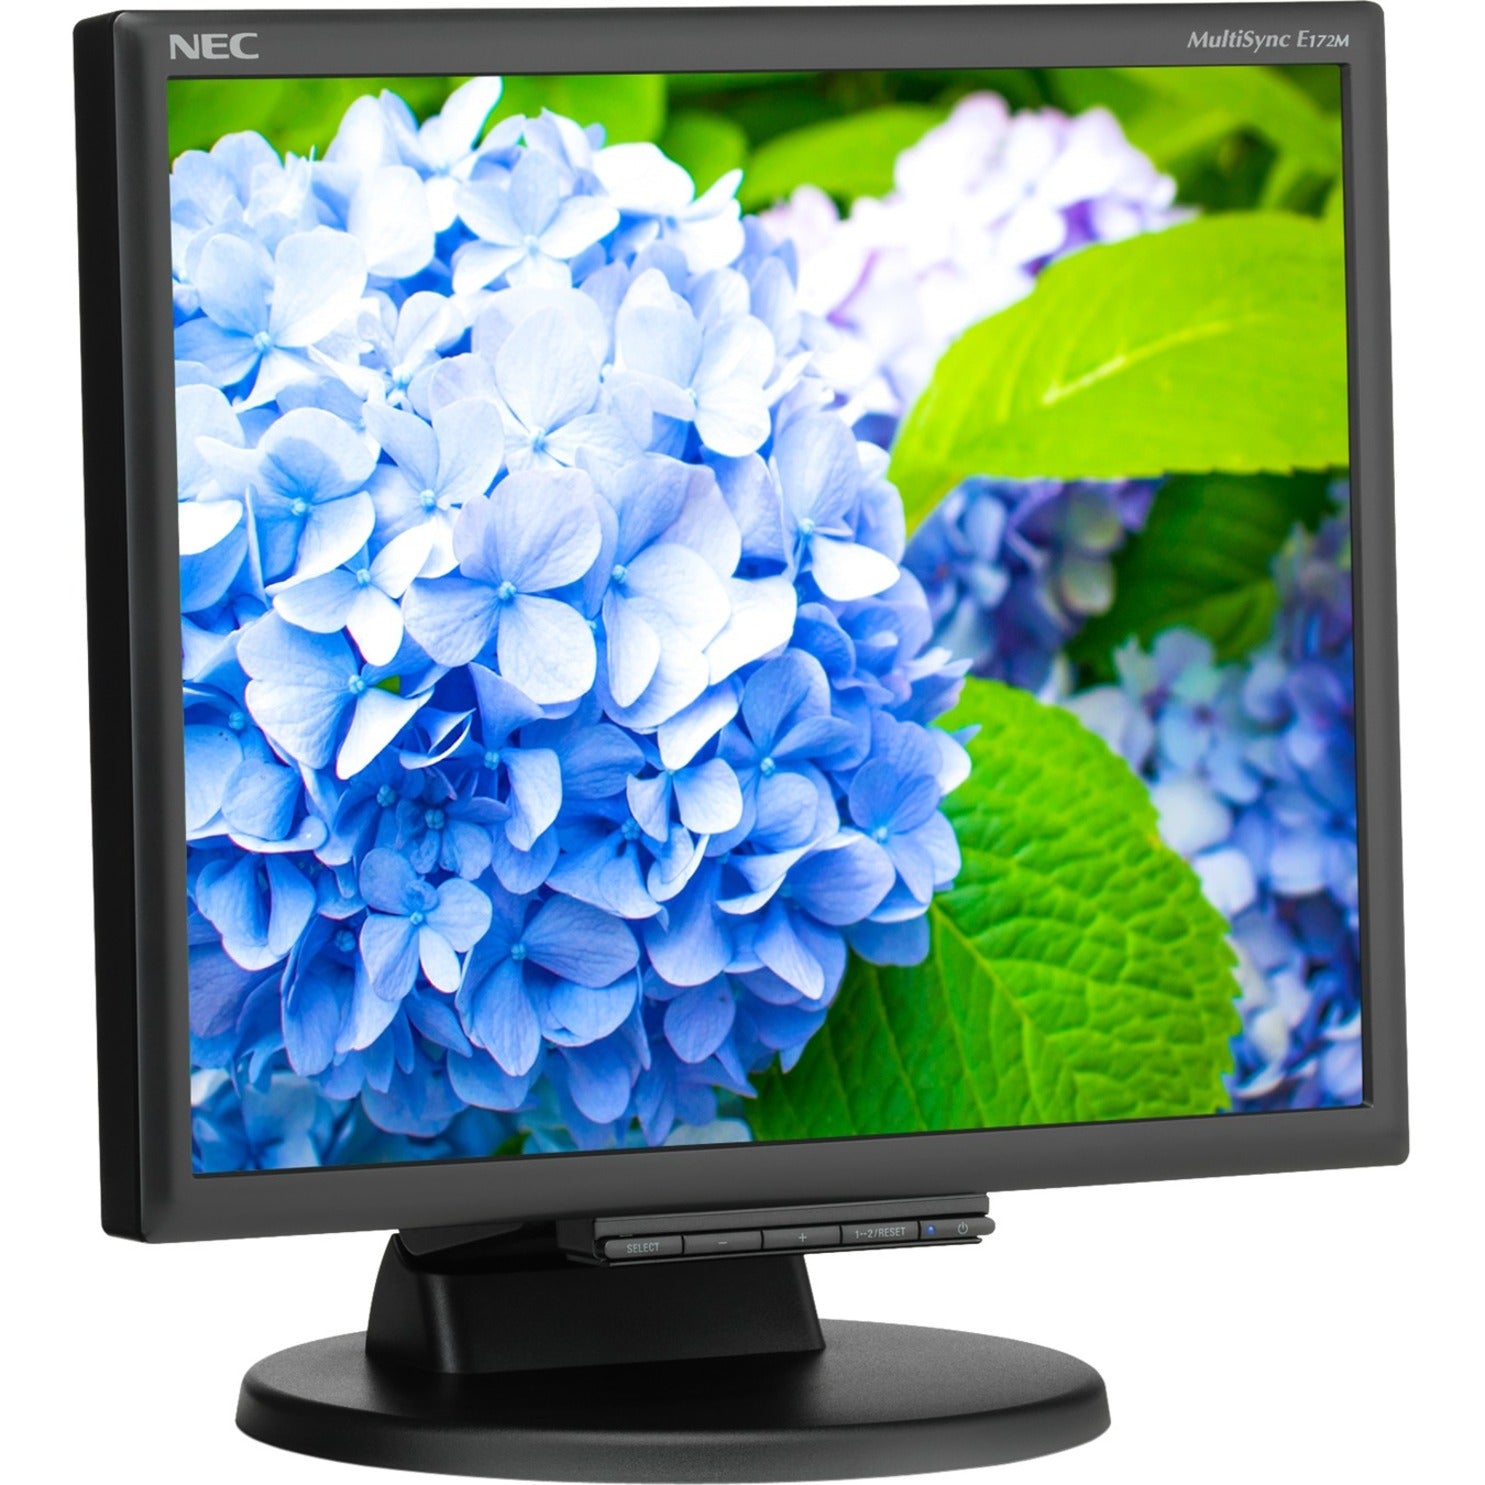 NEC Display E172M-BK 17" Desktop Monitor with LED Backlighting, 5:4 Aspect Ratio, 1280 x 1024 Resolution, Black